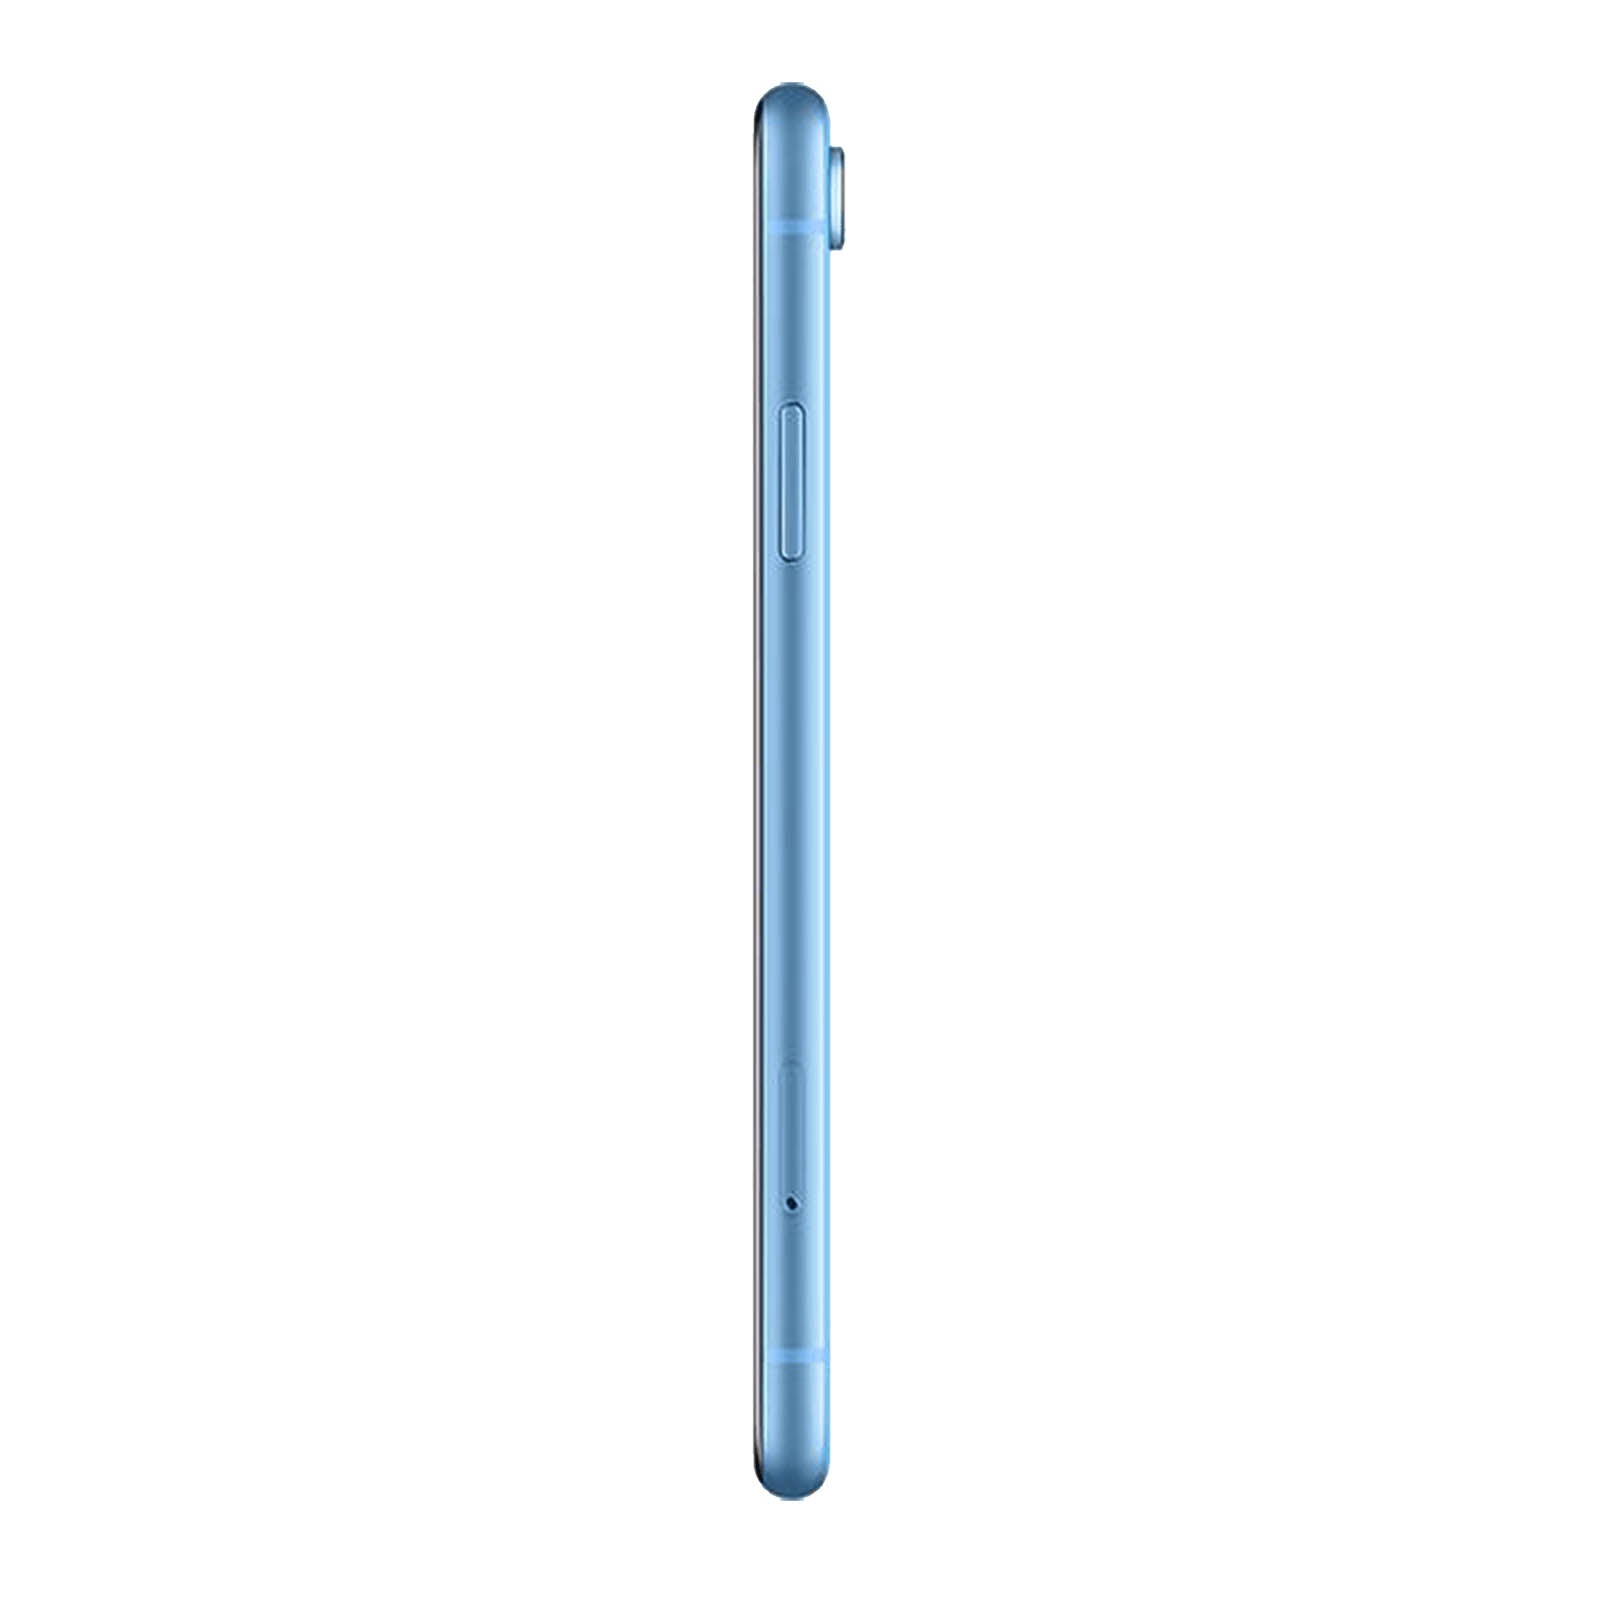 Apple iPhone XR 128GB Blue Good - AT&T